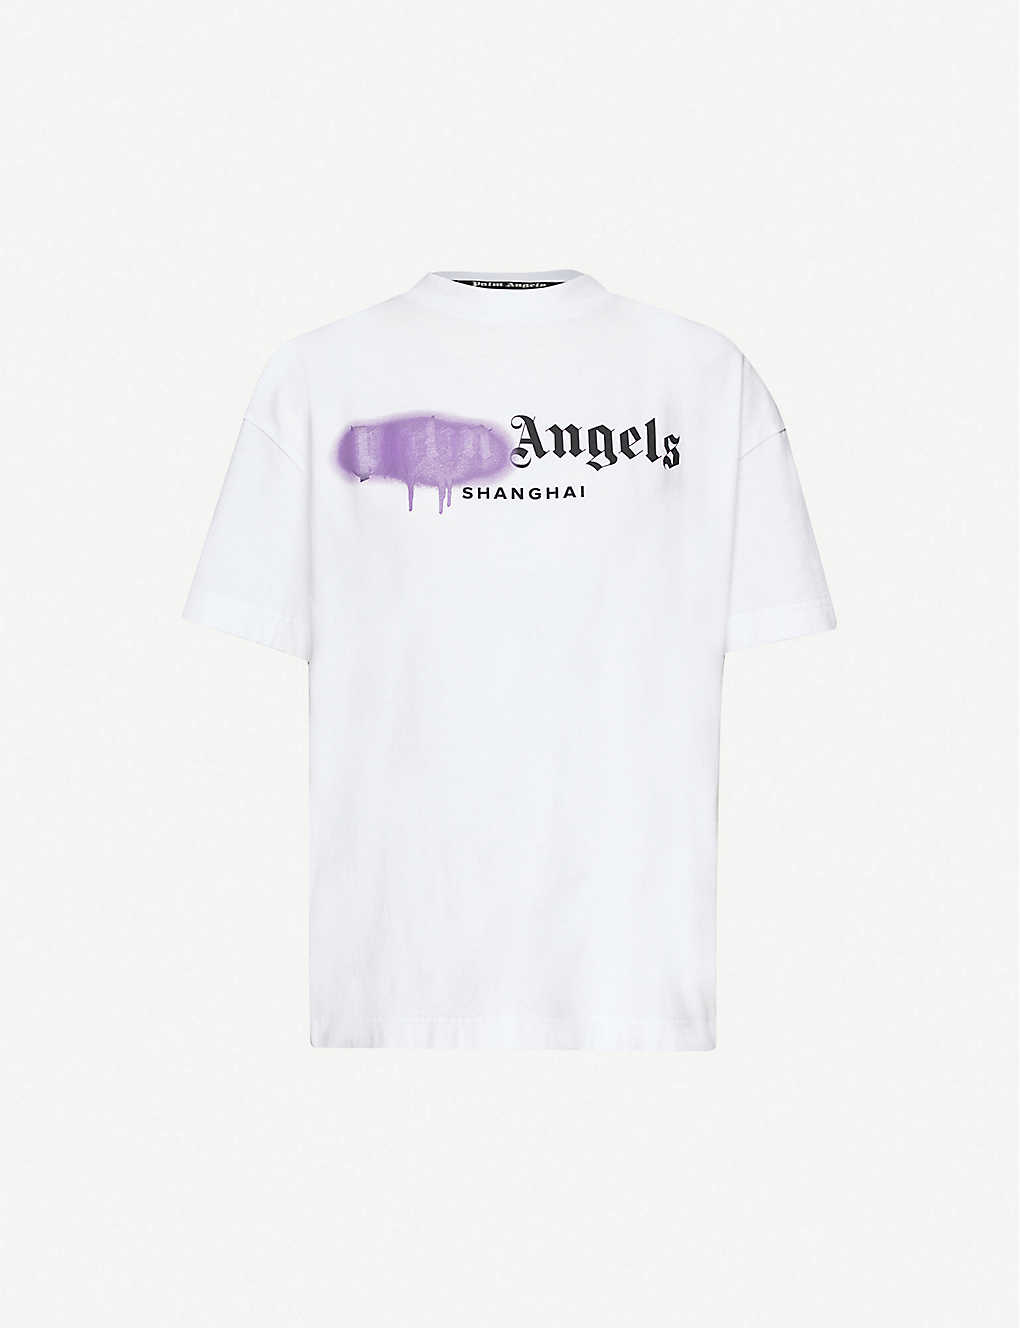 PALM ANGELS - Shanghai spray-logo cotton-jersey T-shirt | Selfridges.com